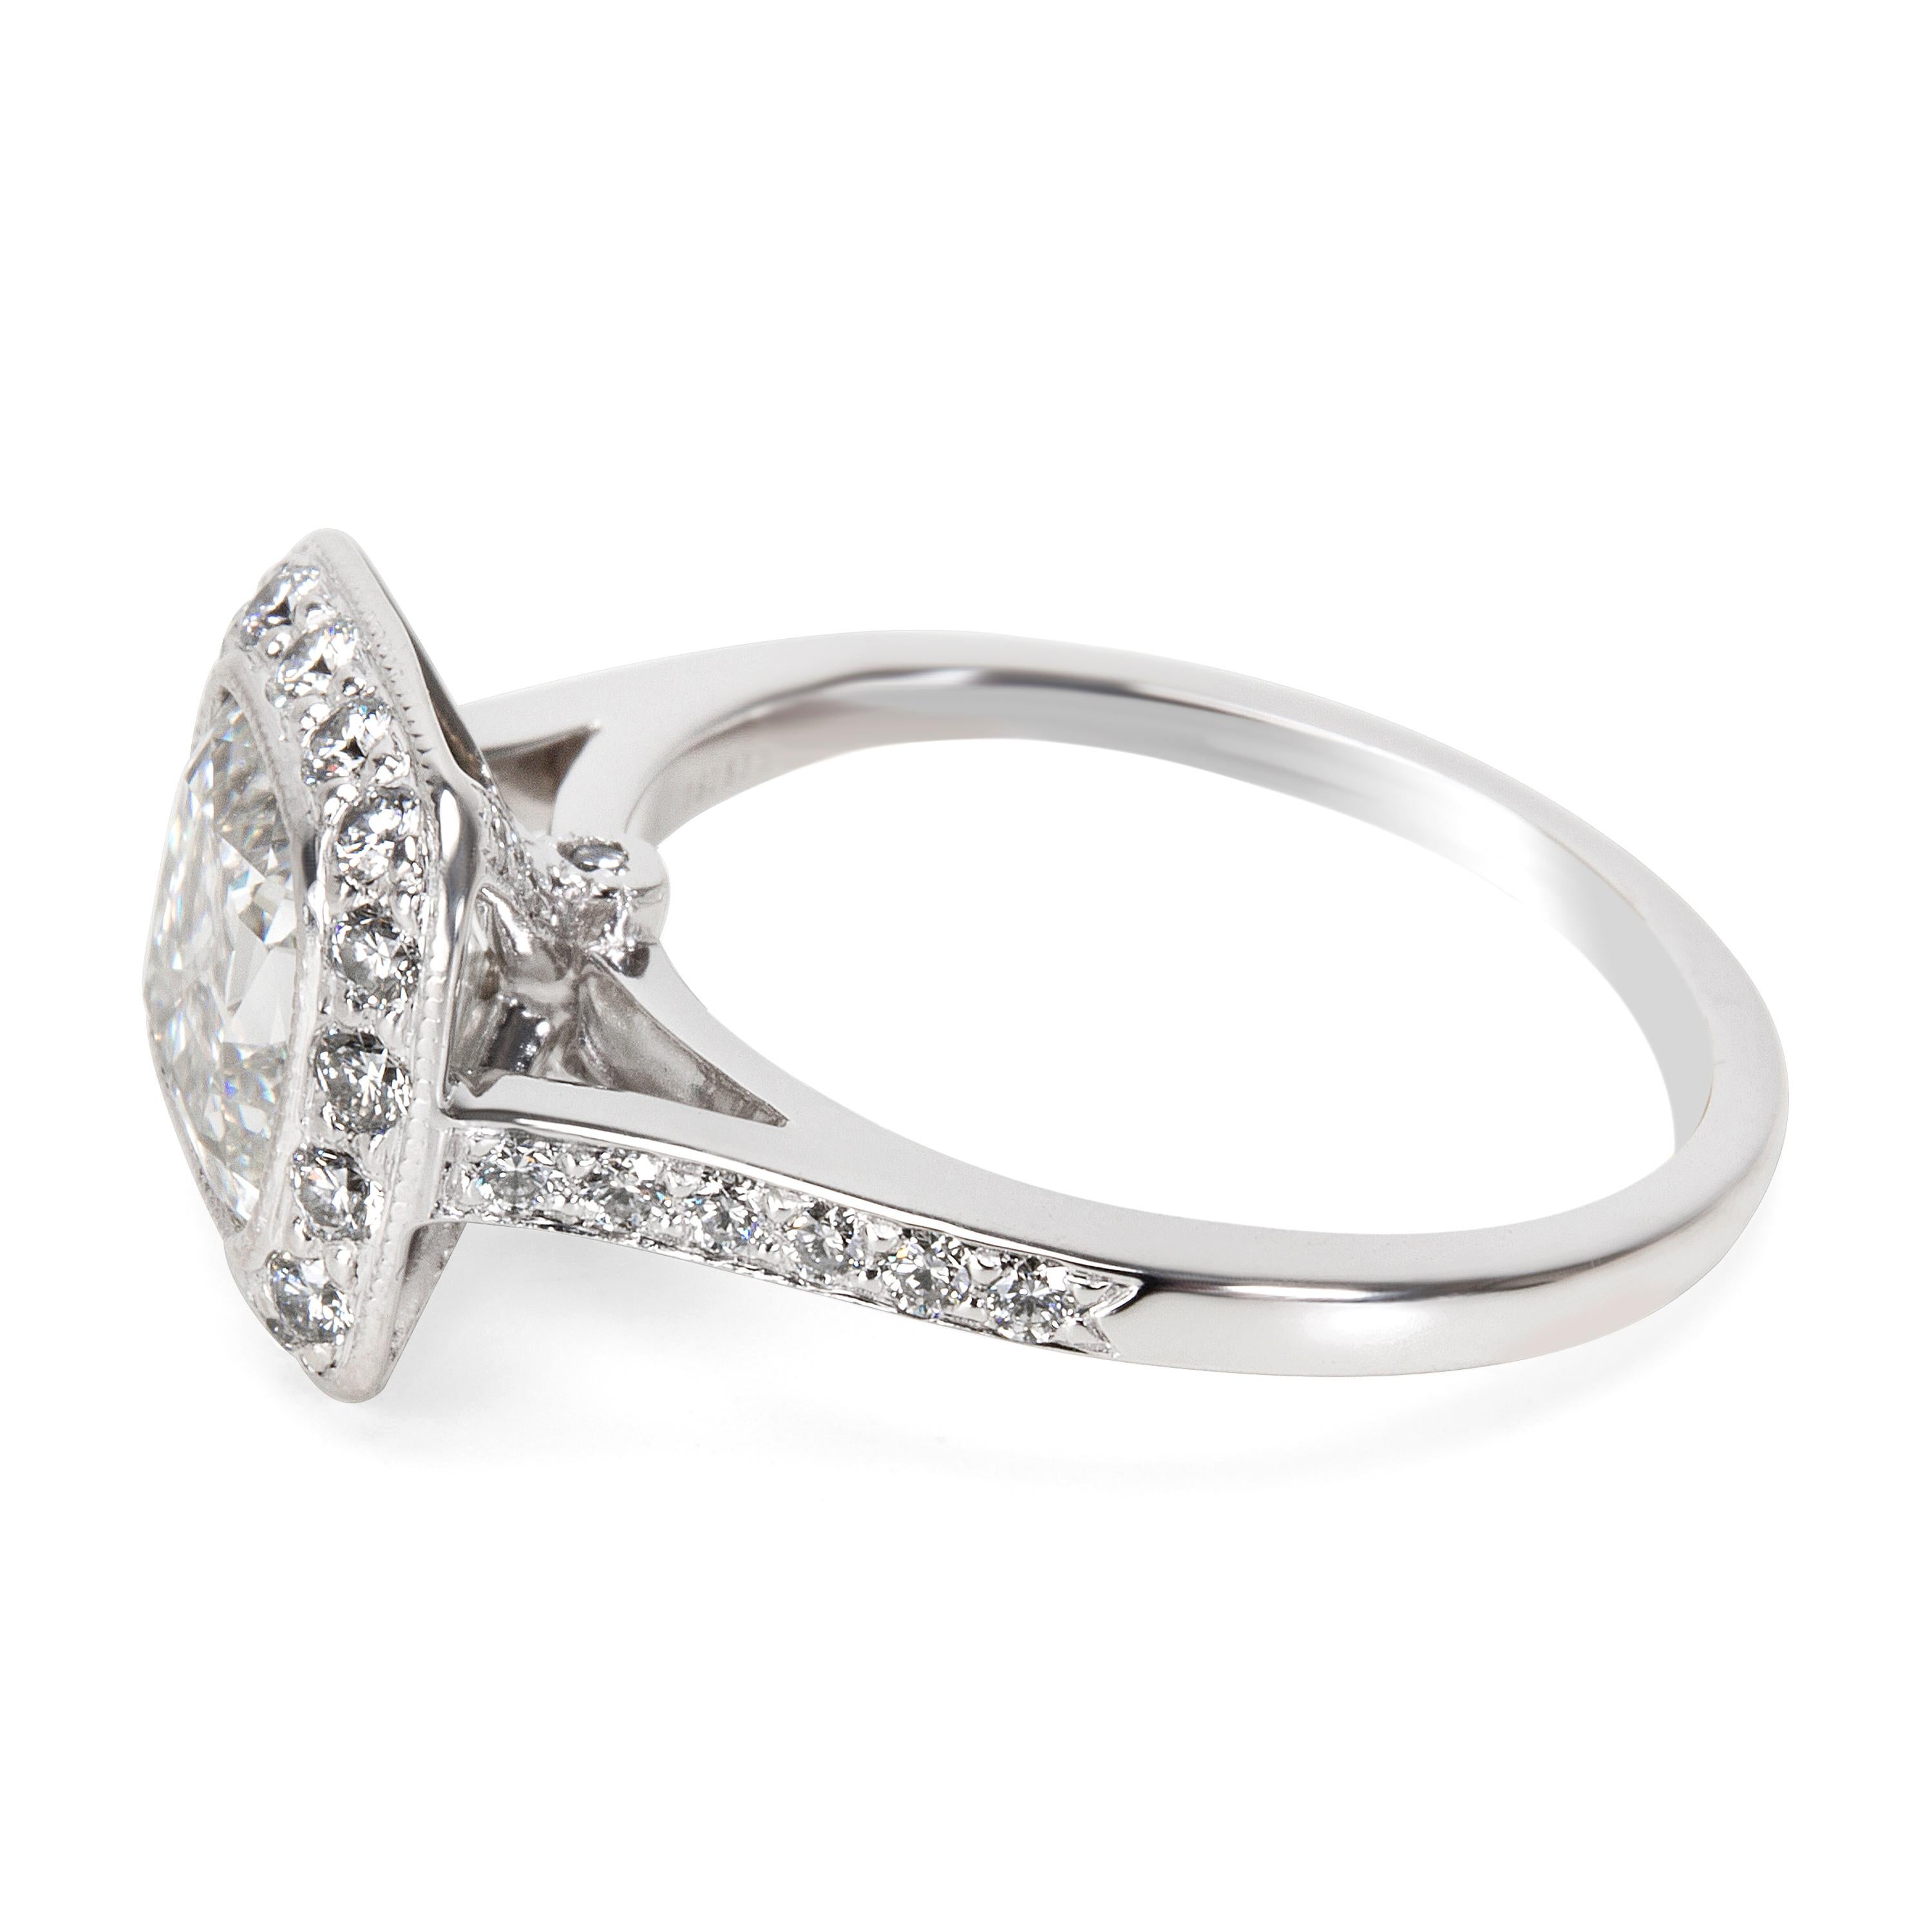 Cushion Cut Tiffany & Co. Legacy Diamond Engagement Ring in Platinum 2.19 Carat